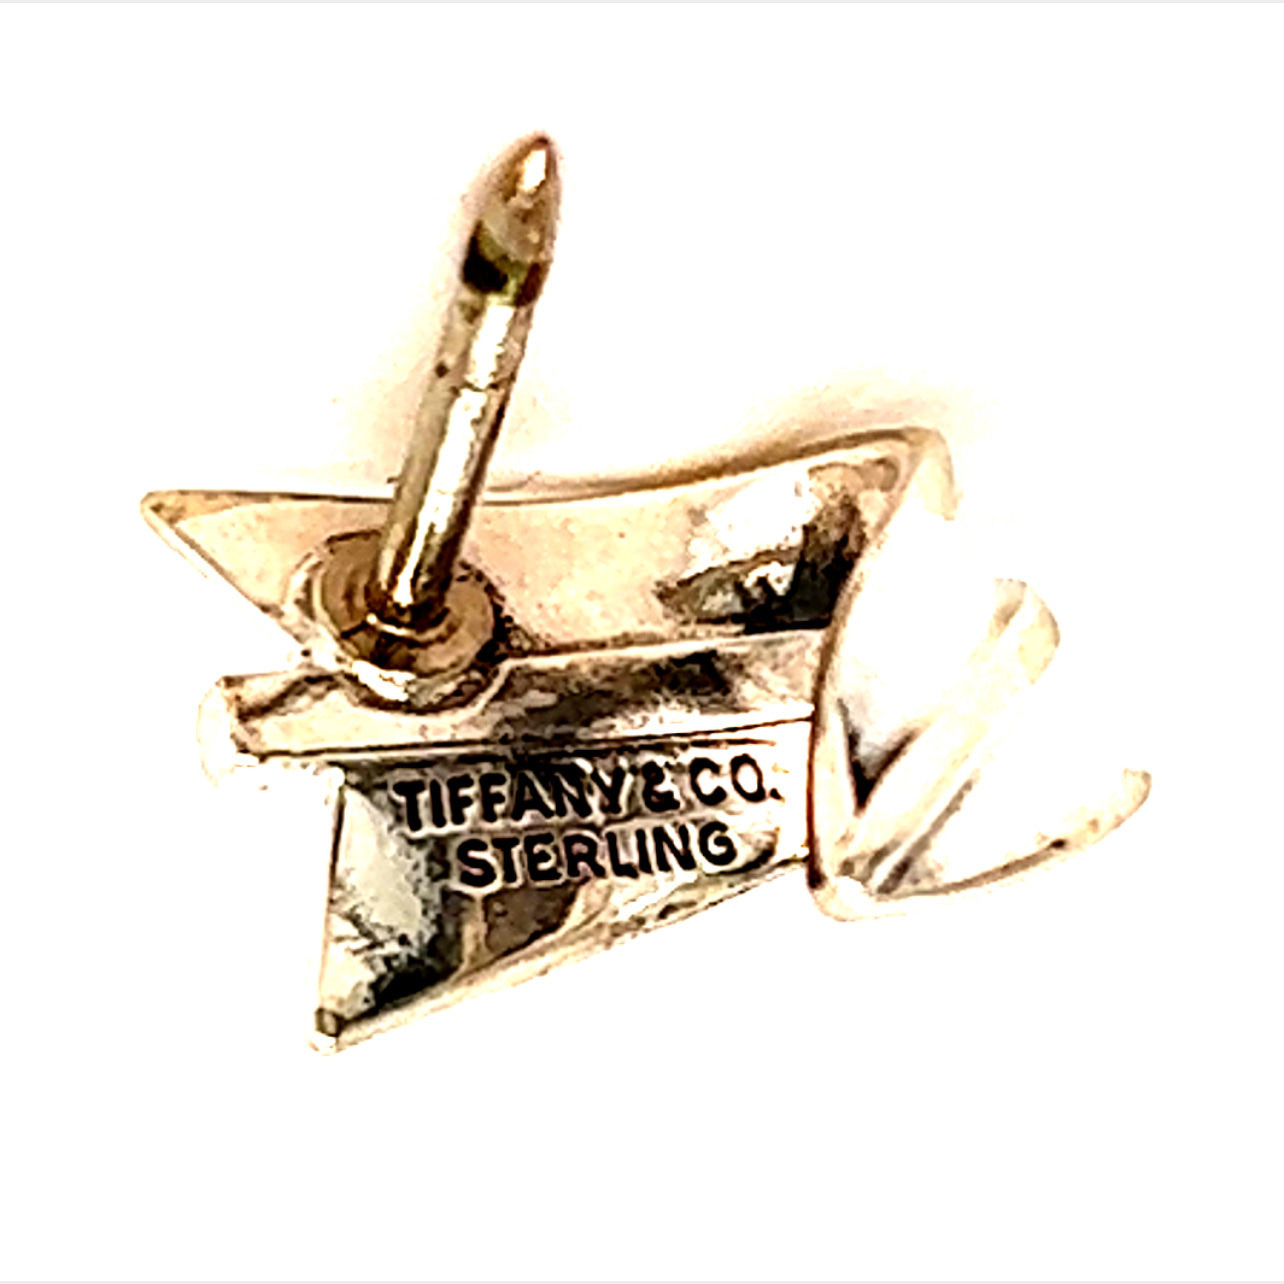 Tiffany & Co Estate "Wave" Tie Pin Sterling Silver 2.7 Grams TIF223 - Certified Estate Jewelry